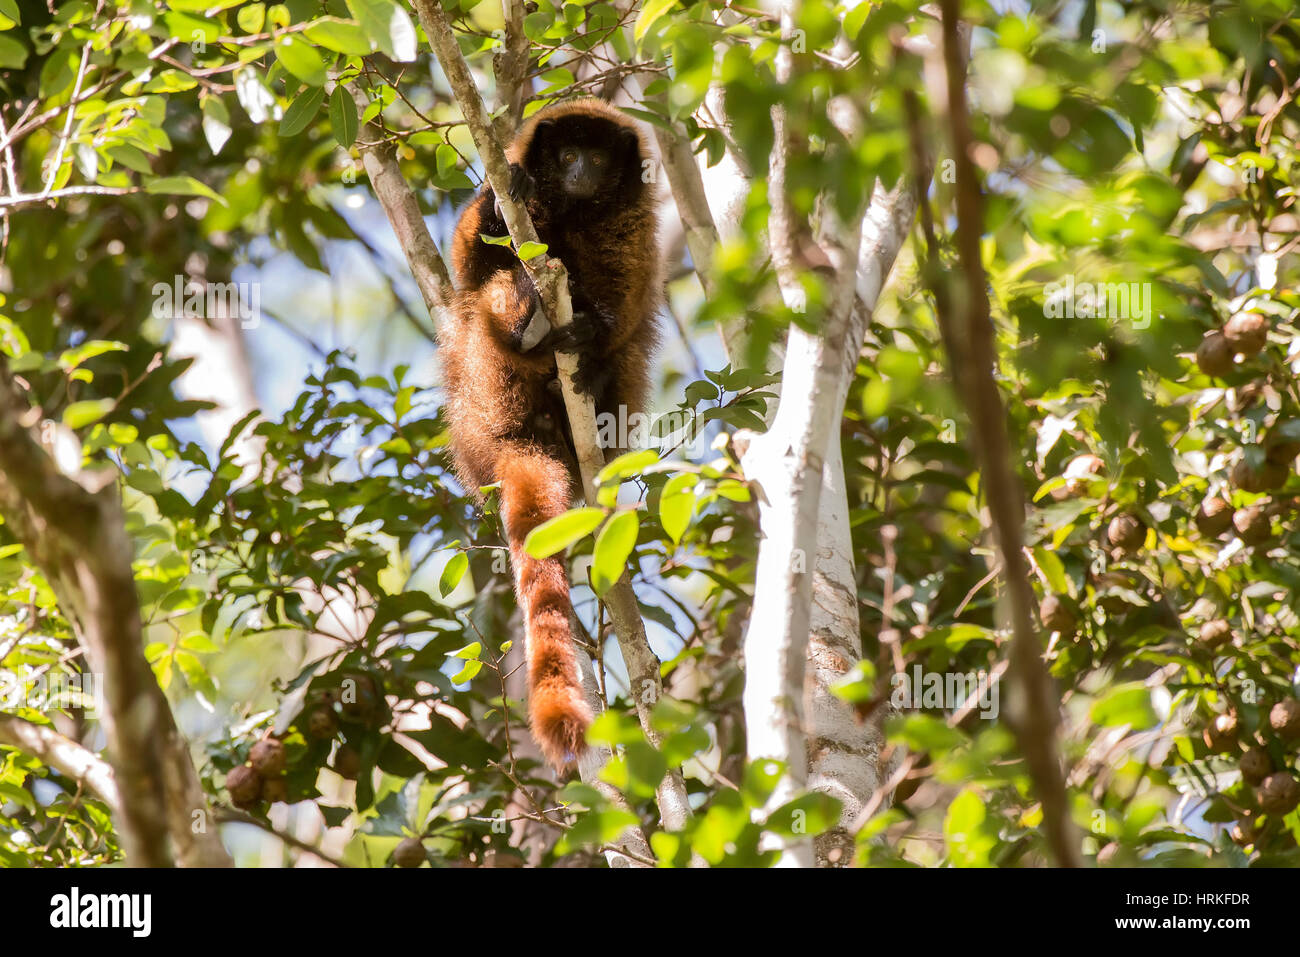 Masked titi monkey (Callicebus personatus), photographed in Domingos Martins, Espírito Santo - Brazil. Atlantic forest Biome. Wild animal. Stock Photo